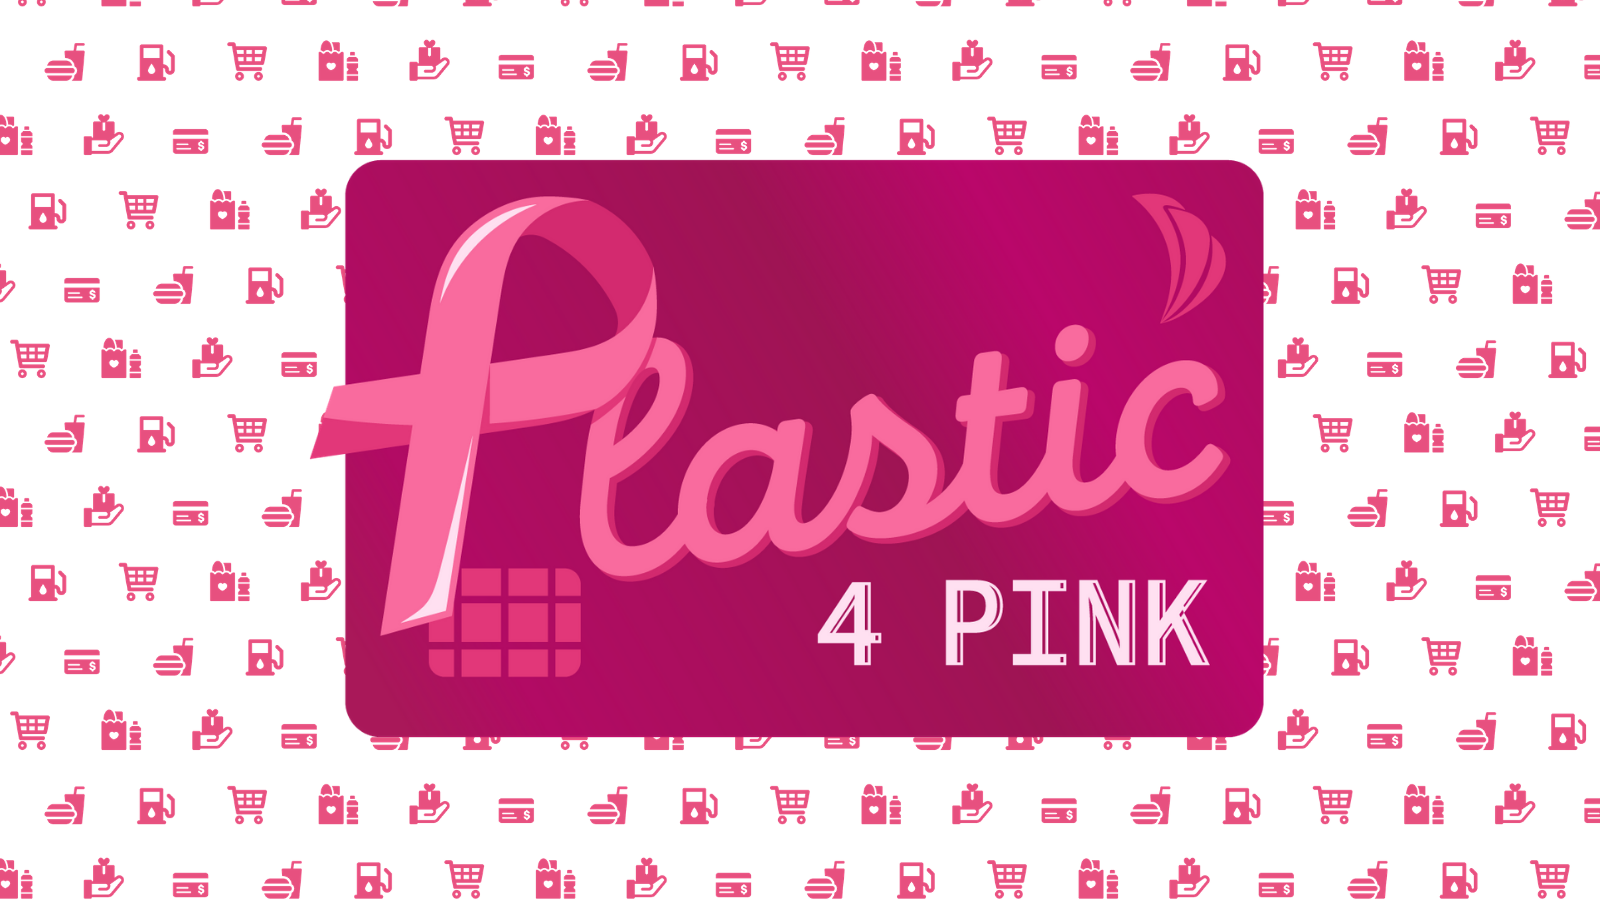 Plastic 4 Pink